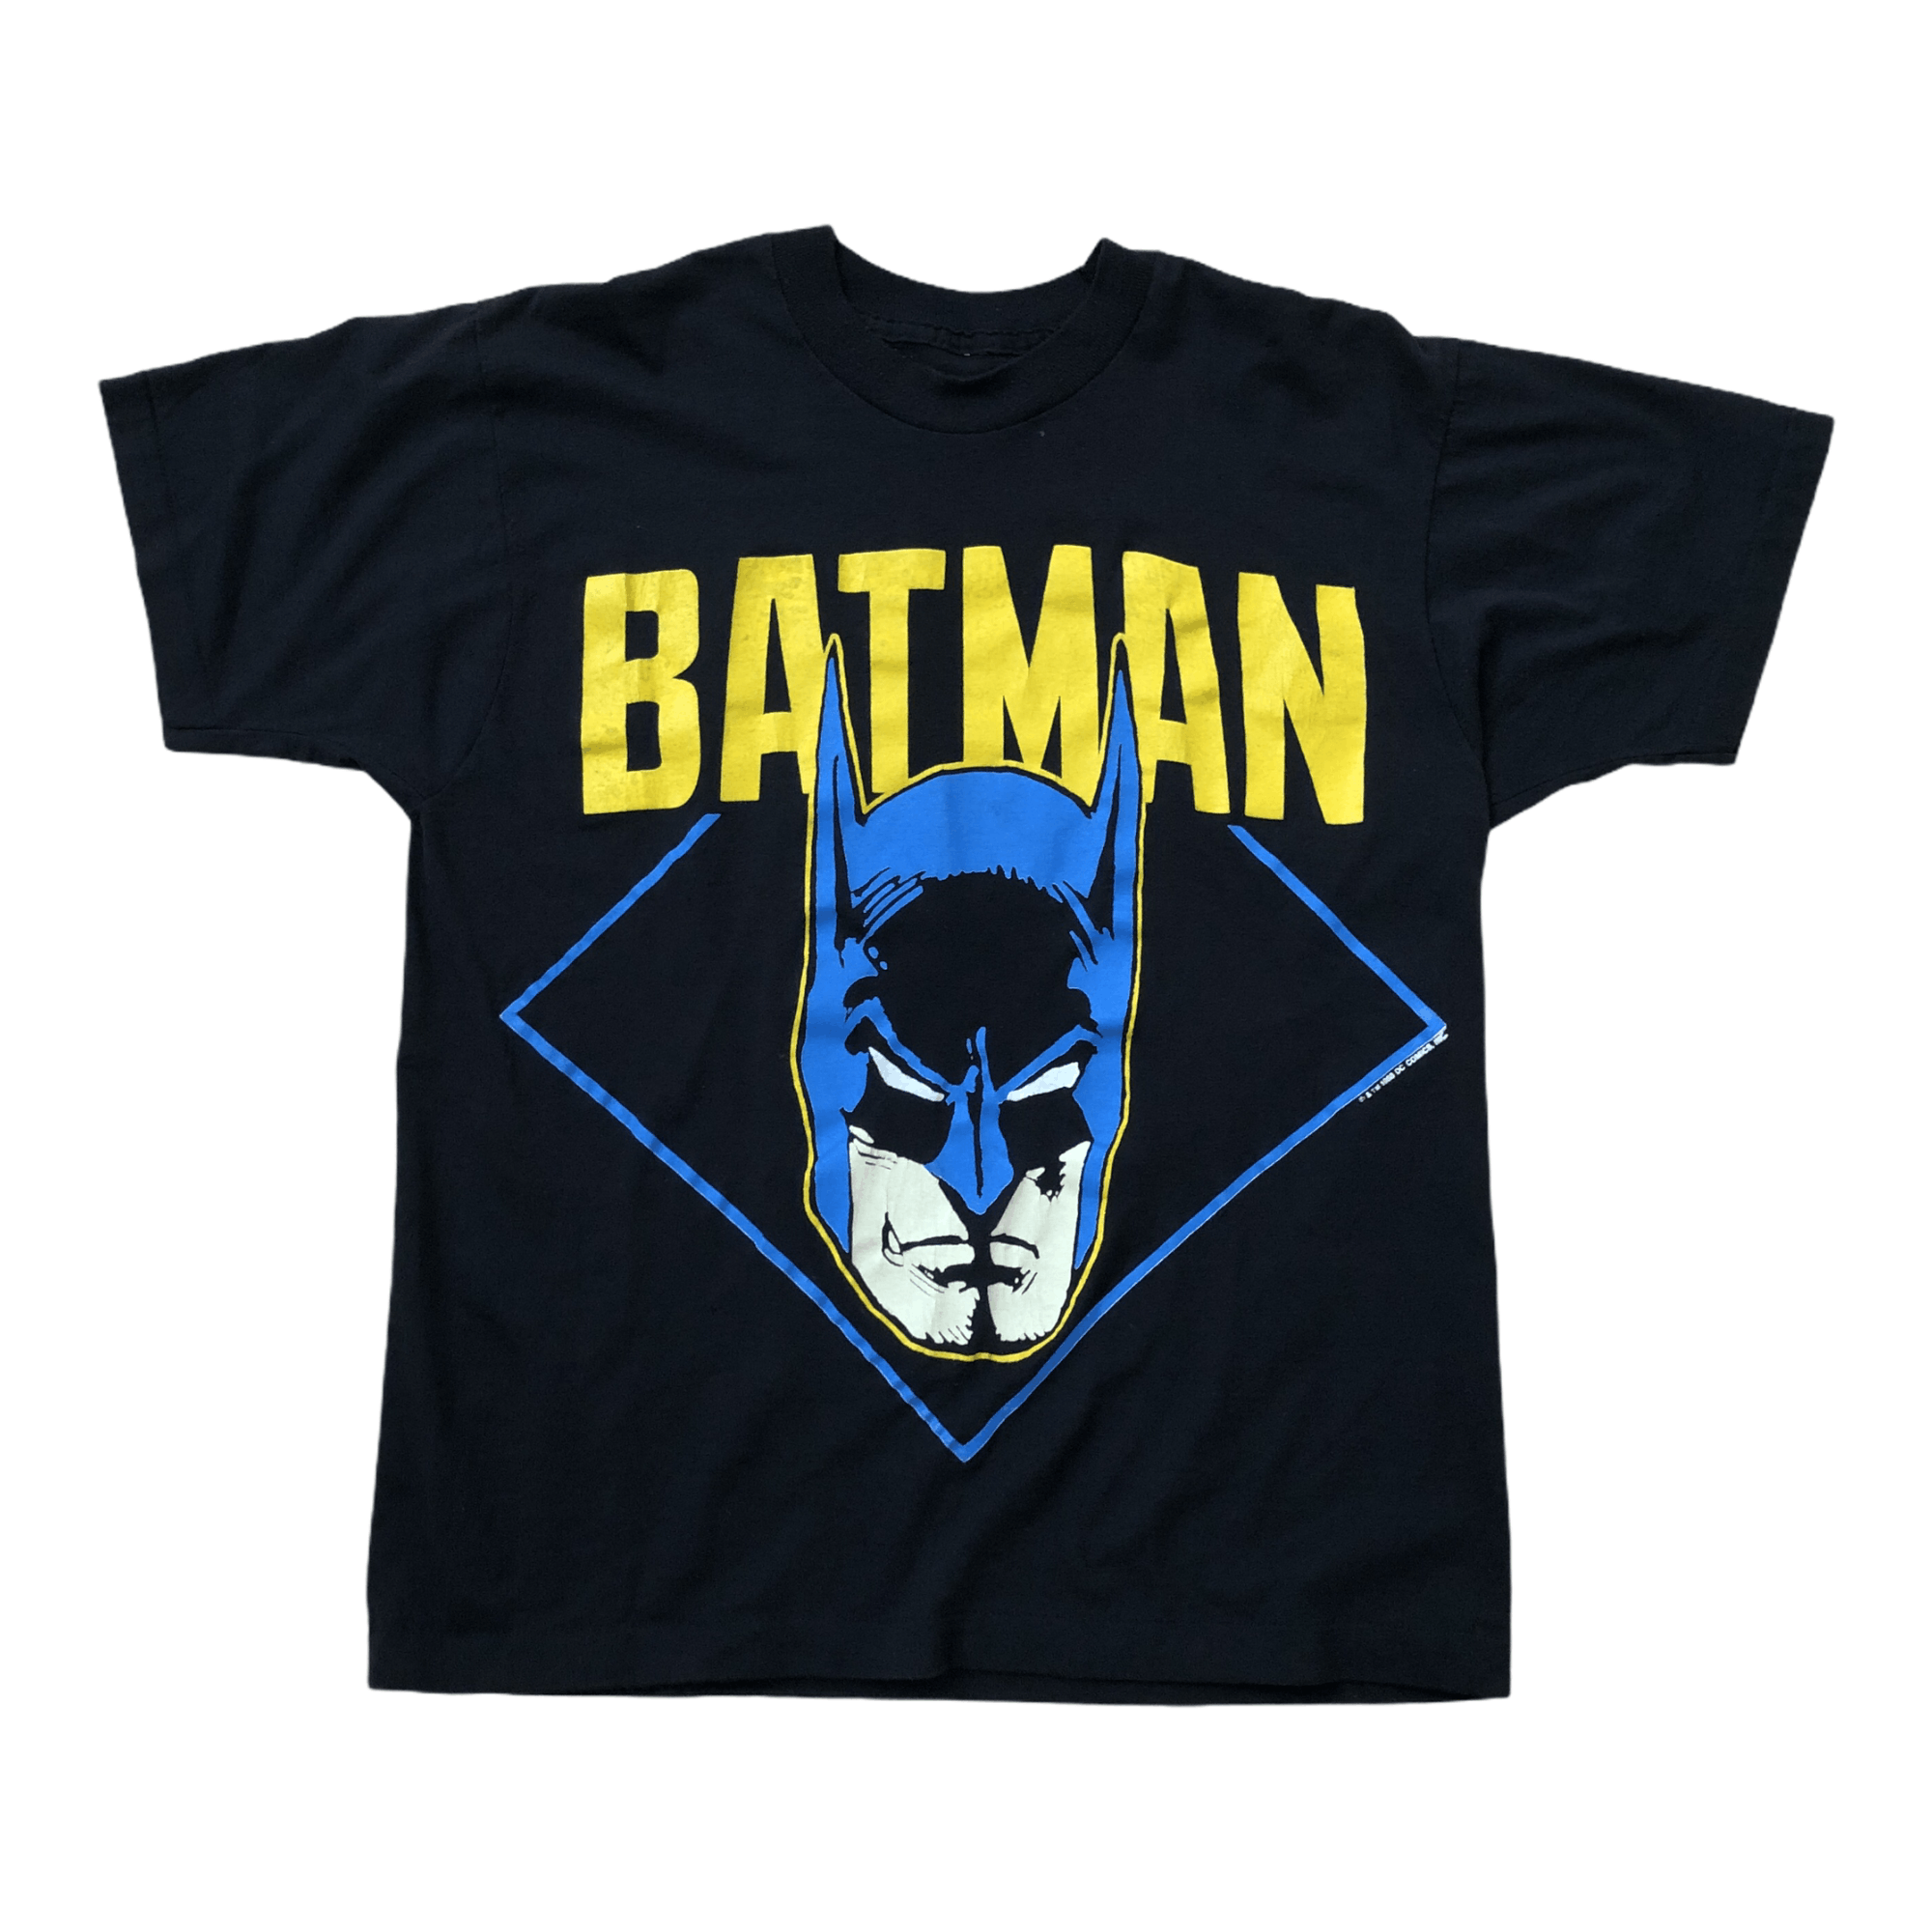 Dc Comics Batman DC Comics 1988 Vintage Big Graphic Print T-Shirt Size US M / EU 48-50 / 2 - 1 Preview